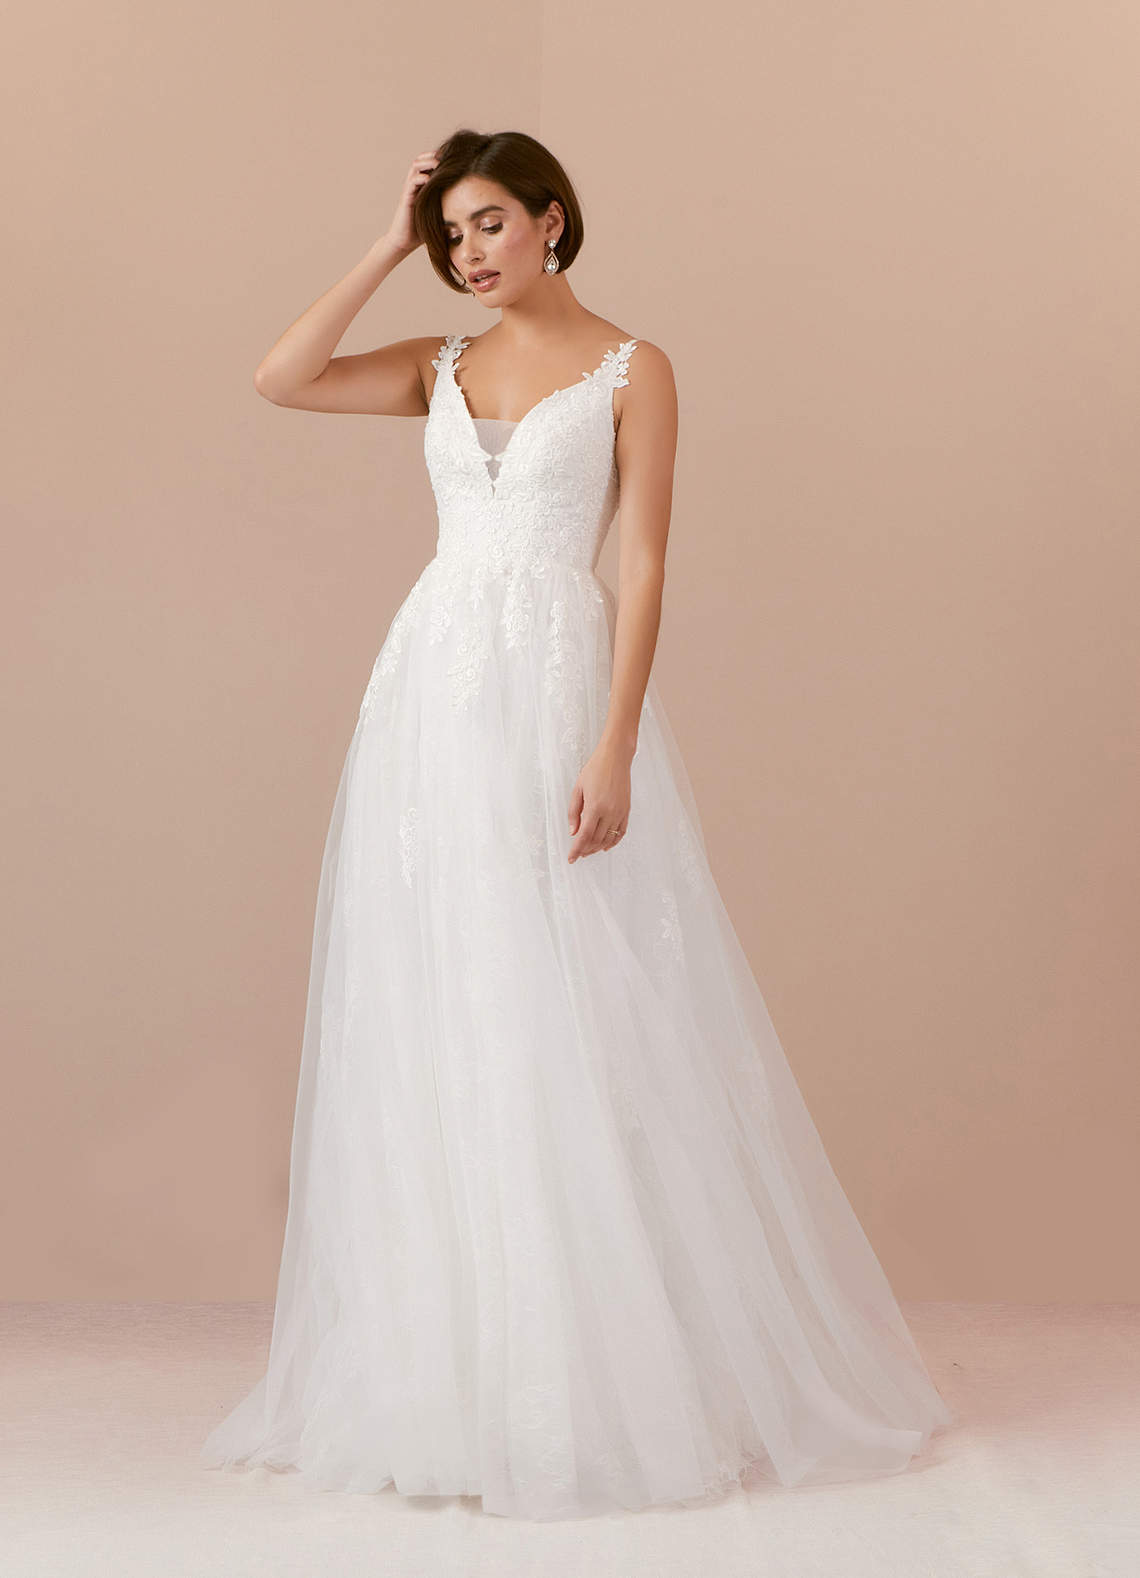 Azazie Jolene Wedding Dresses A-Line Lace Tulle Cathedral Train Dress image1